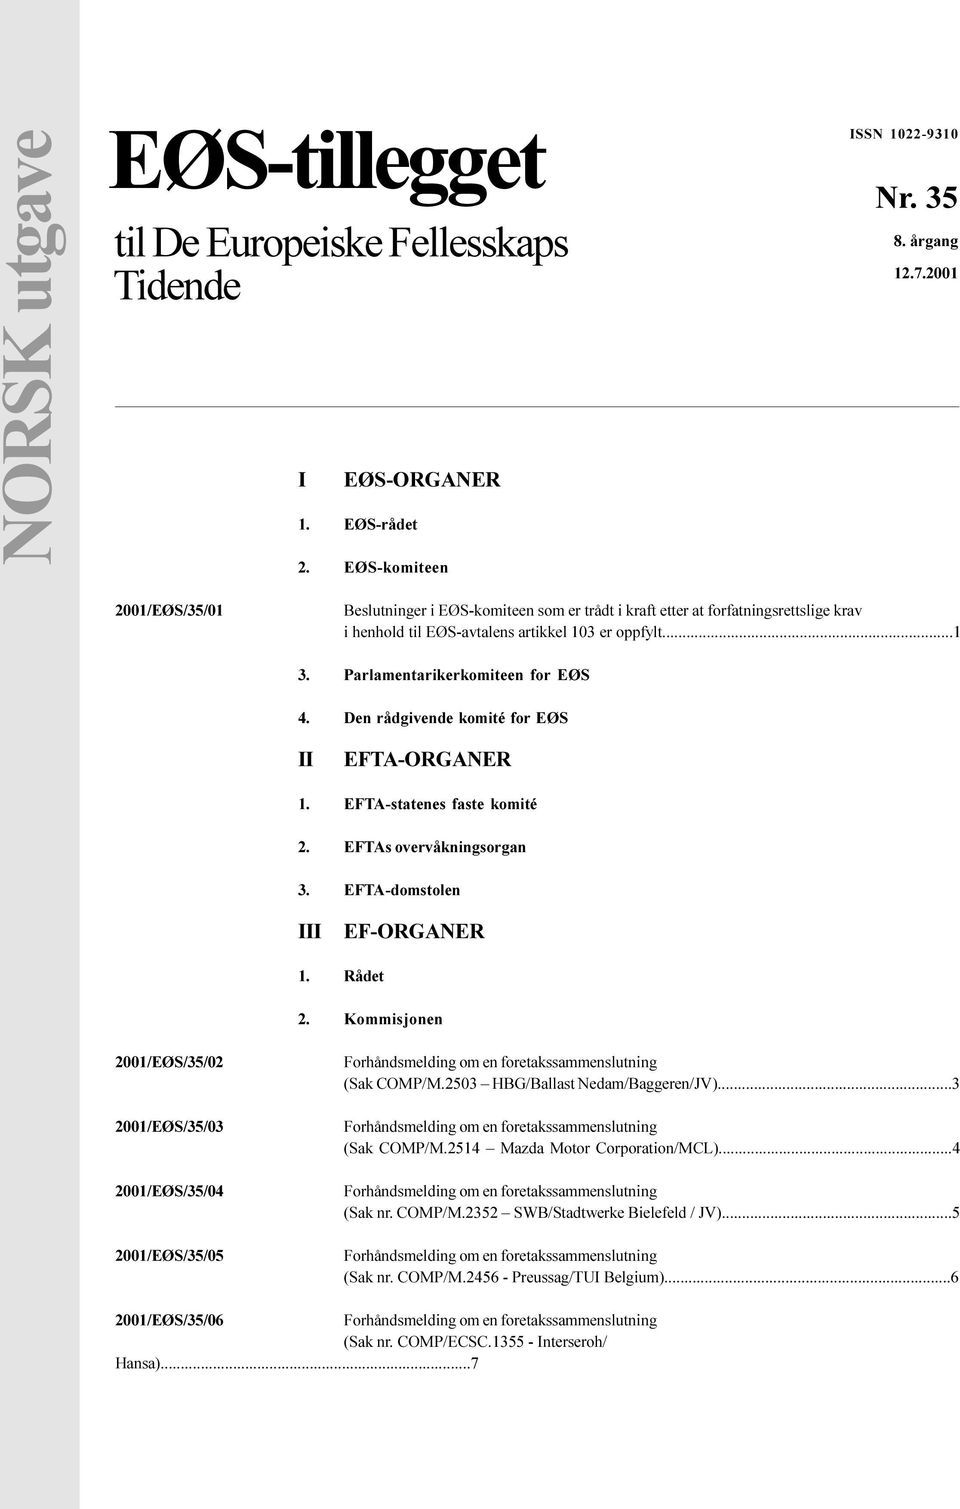 EFTA-statenes faste komité EFTAs overvåkningsorgan EFTA-domstolen EF-ORGANER Rådet Kommisjonen 2001/EØS/35/02 2001/EØS/35/03 2001/EØS/35/04 2001/EØS/35/05 (Sak COMP/M 2503 HBG/Ballast